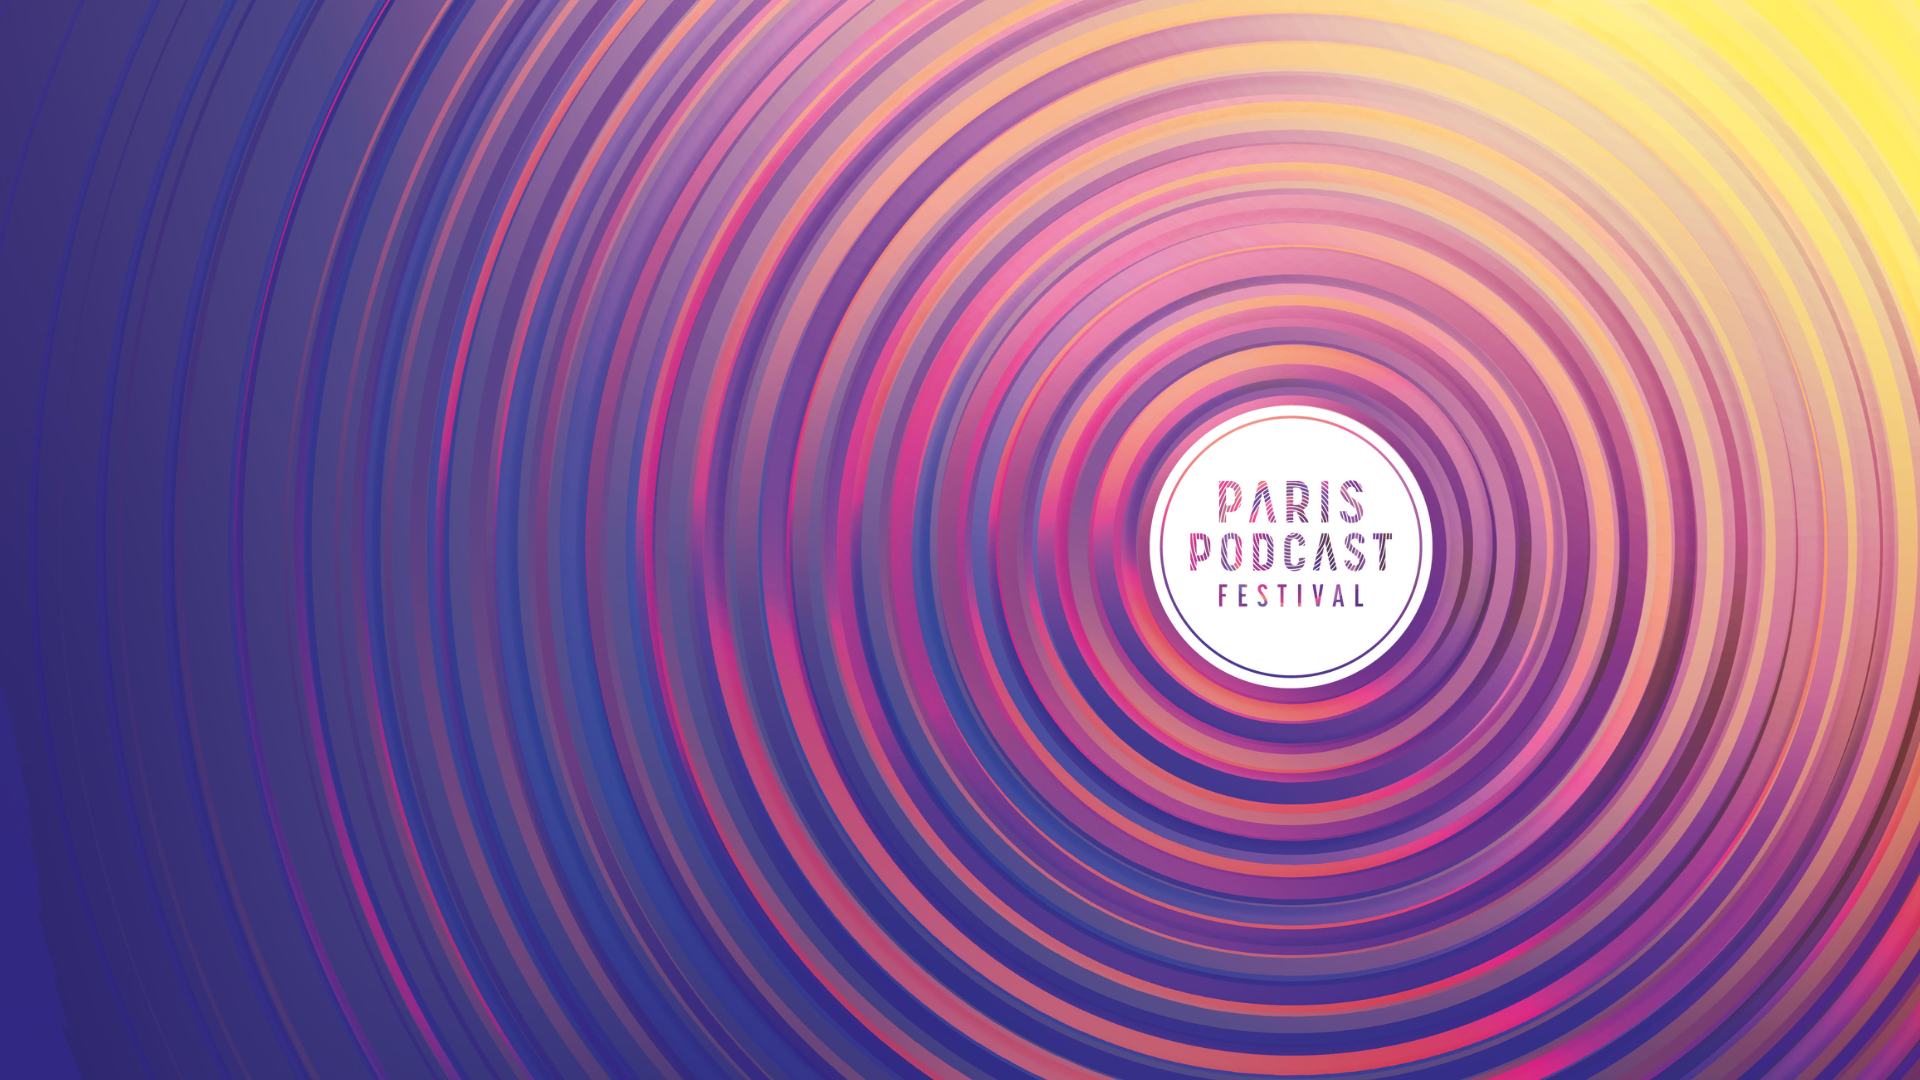 Paris Podcast Festival 2020